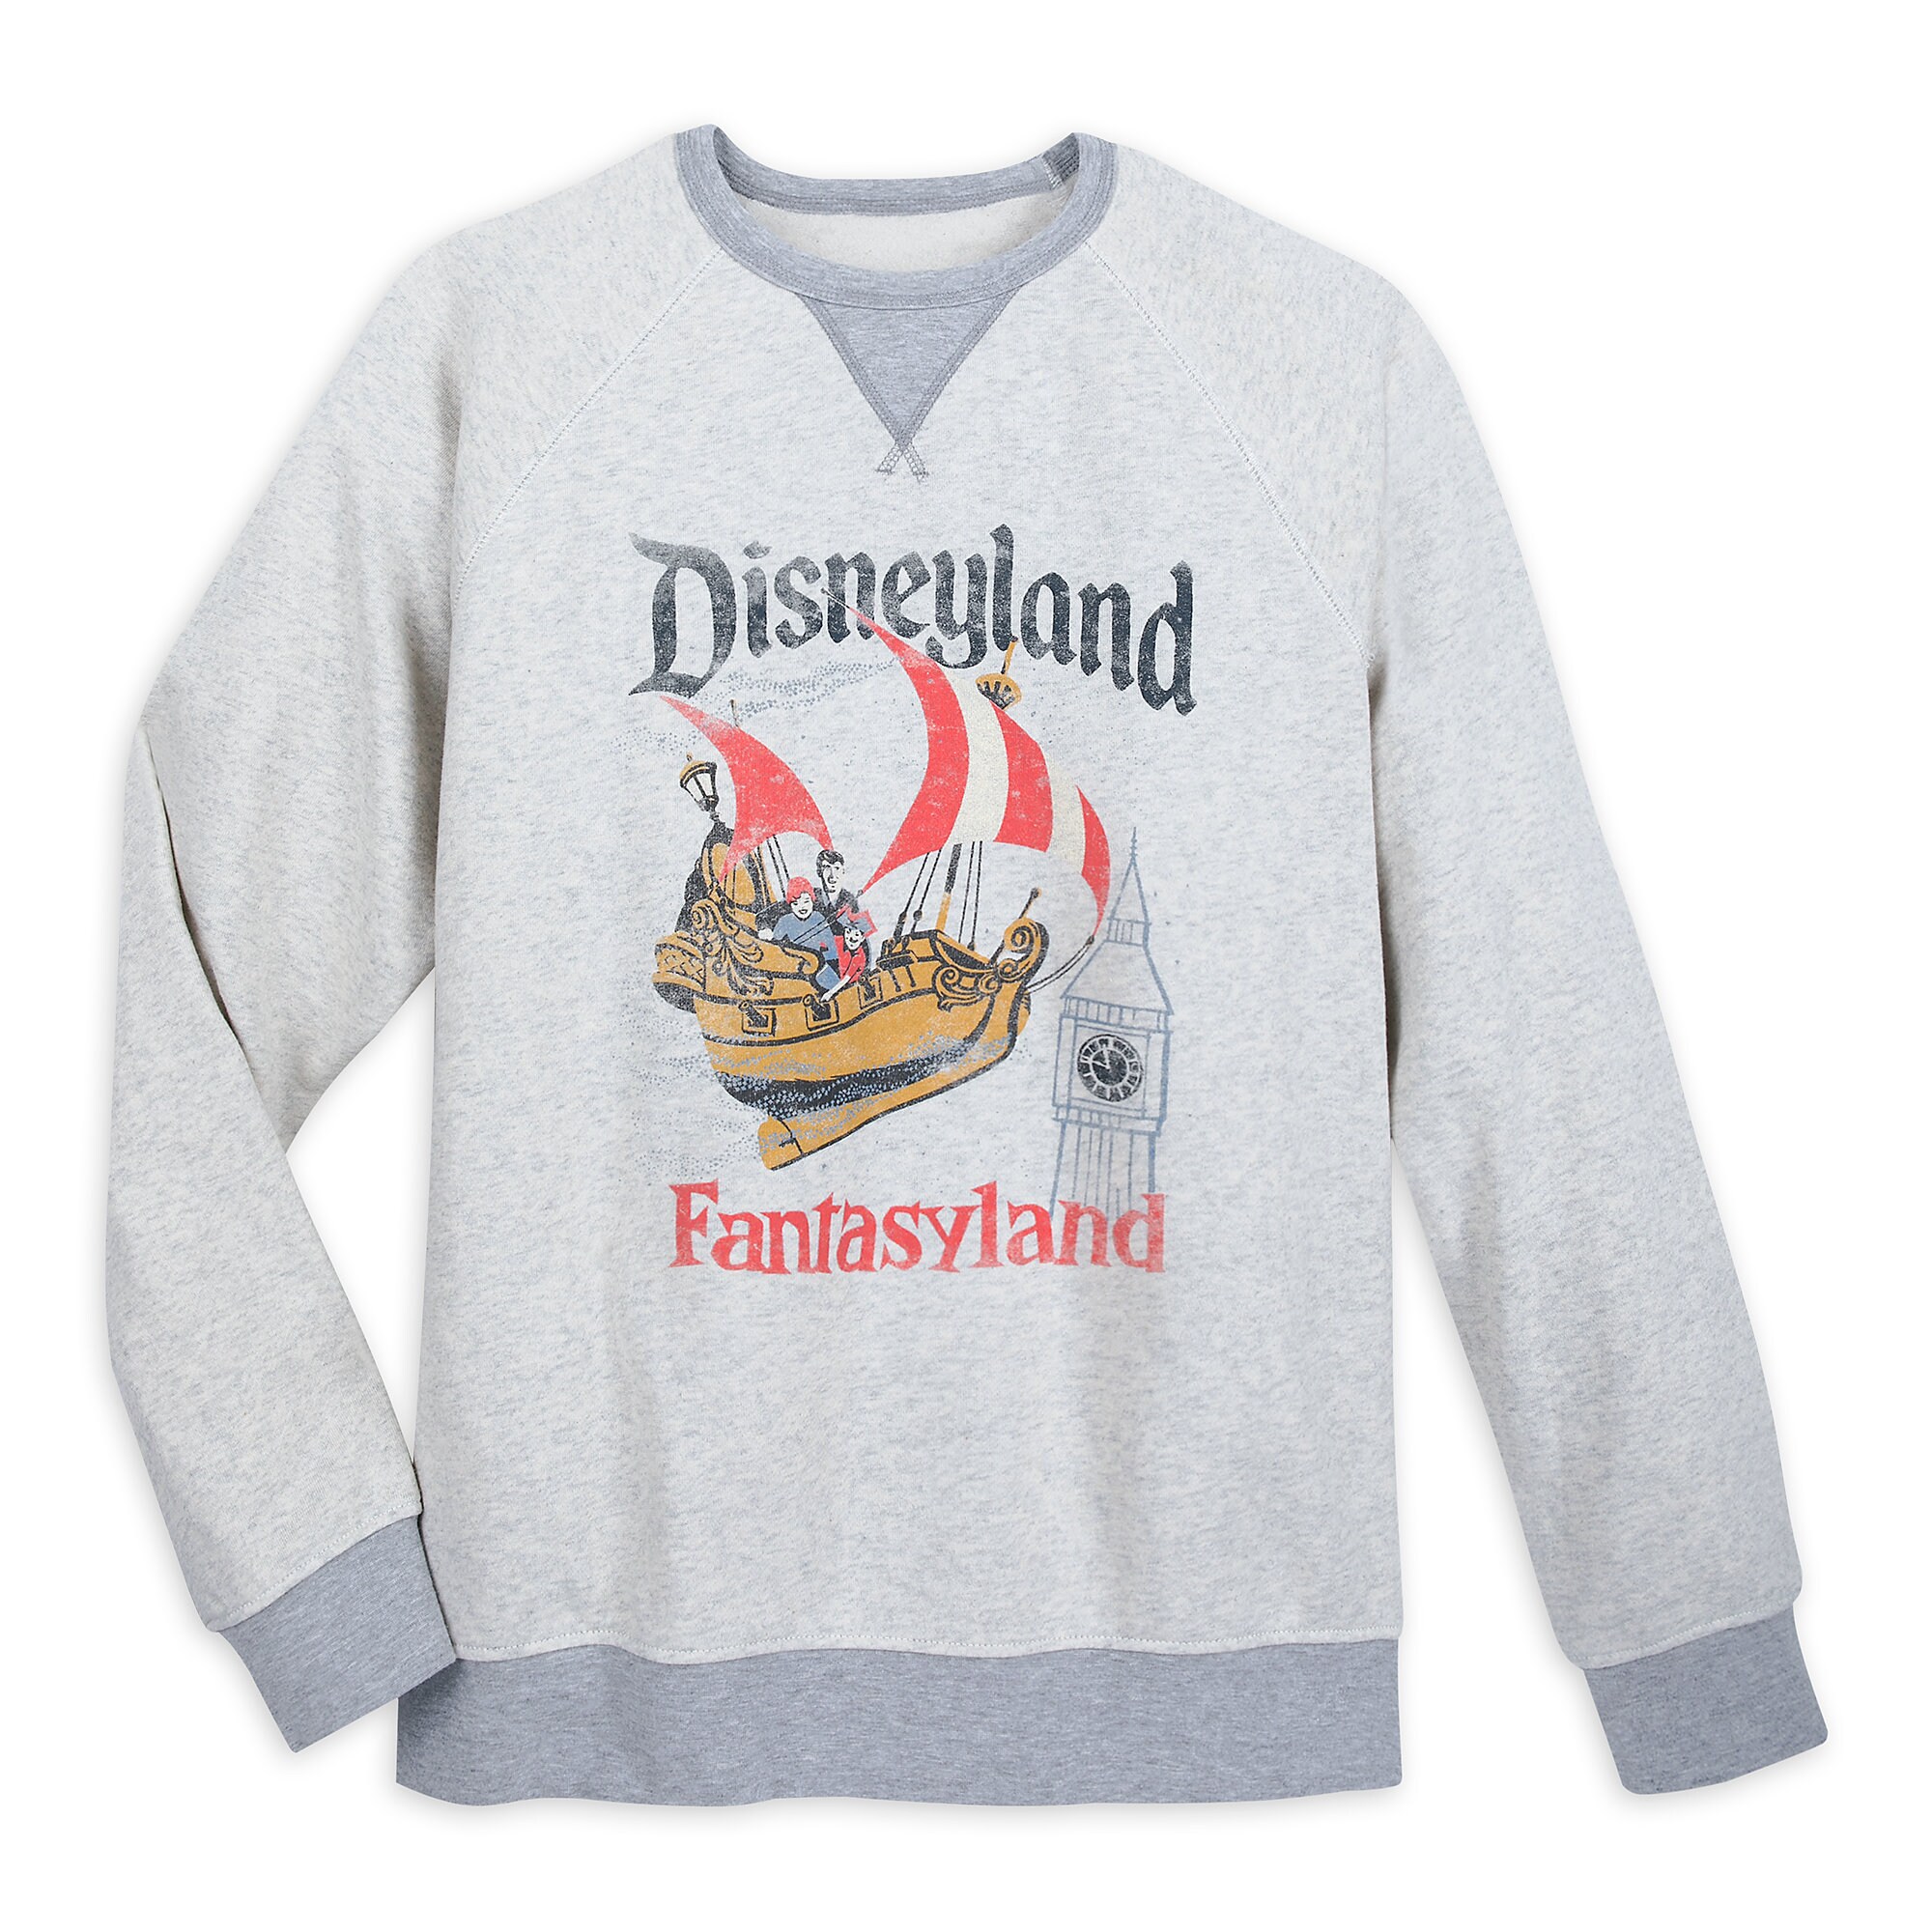 Fantasyland Sweatshirt for Men by Junk Food - Disneyland